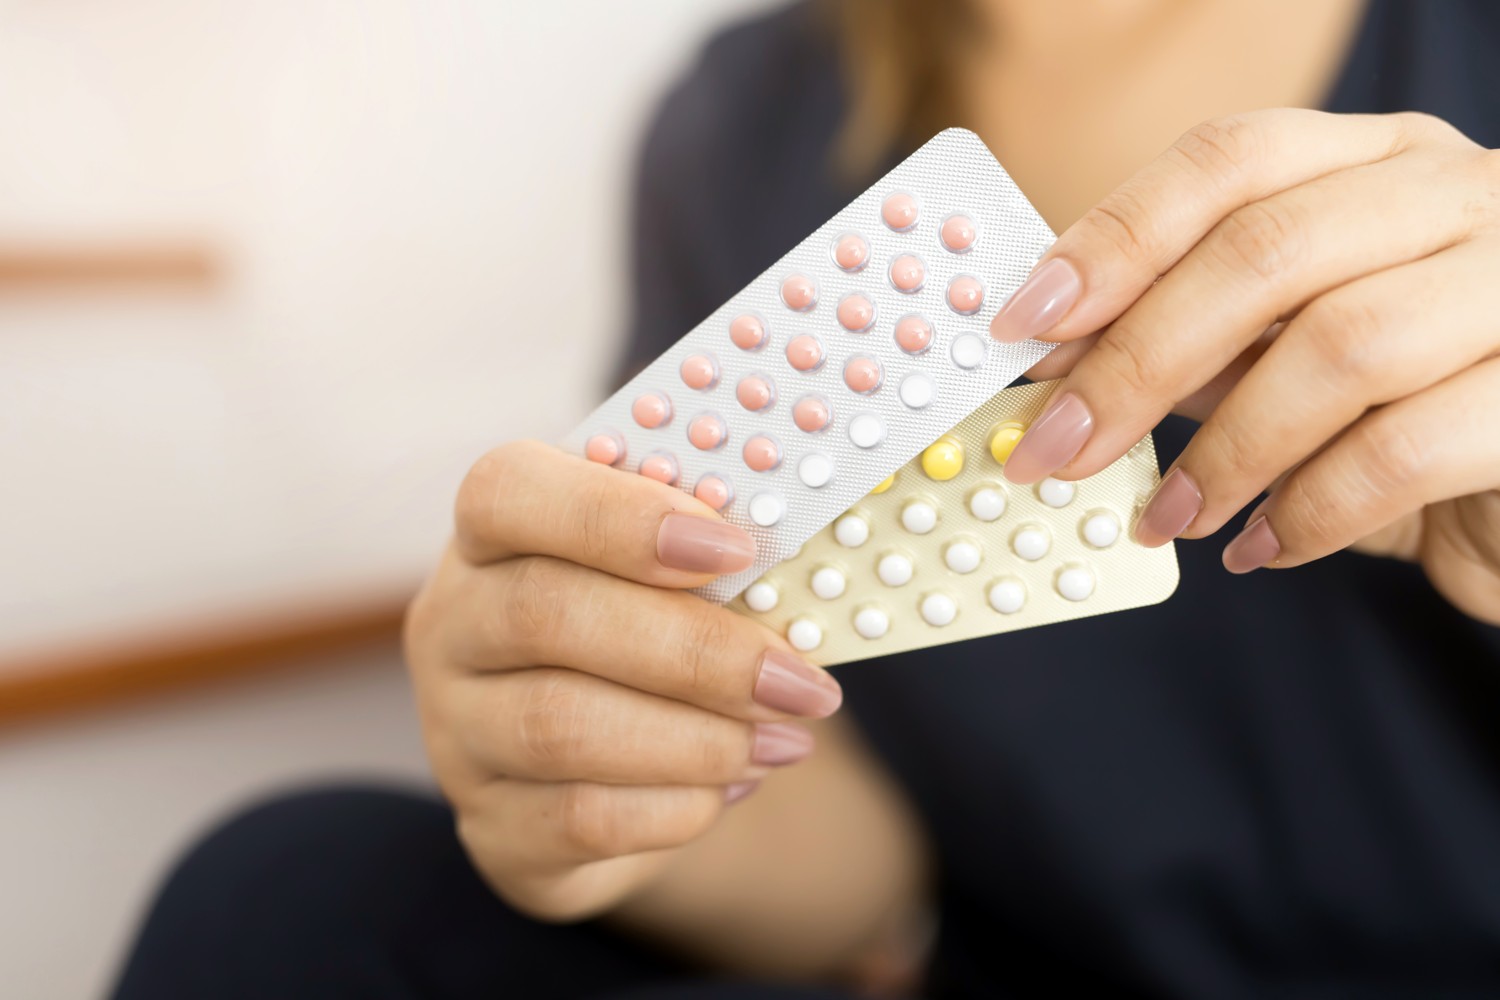 Kombinovaná, dvojzložková, antikoncepcia obsahuje estrogén a gestagén, jednozložková antikoncepcia obsahuje len gestagén